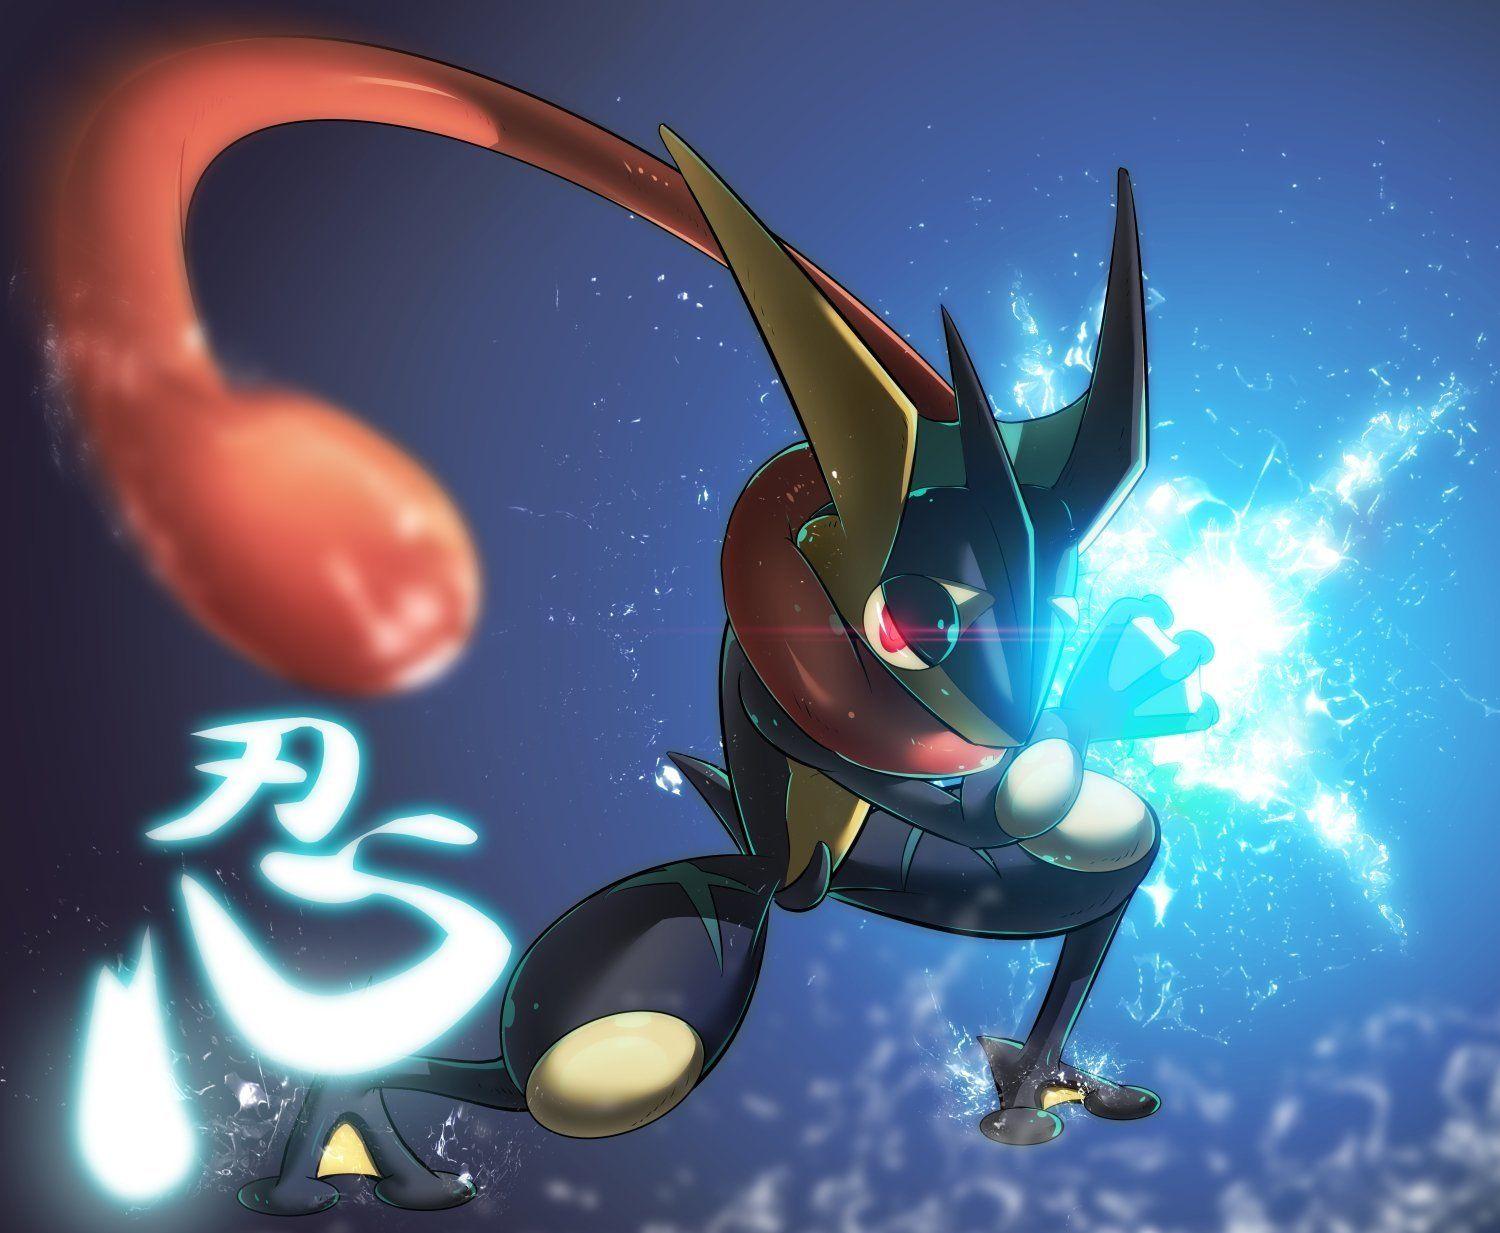 Greninja (Pokémon) HD Wallpaper and Background Image